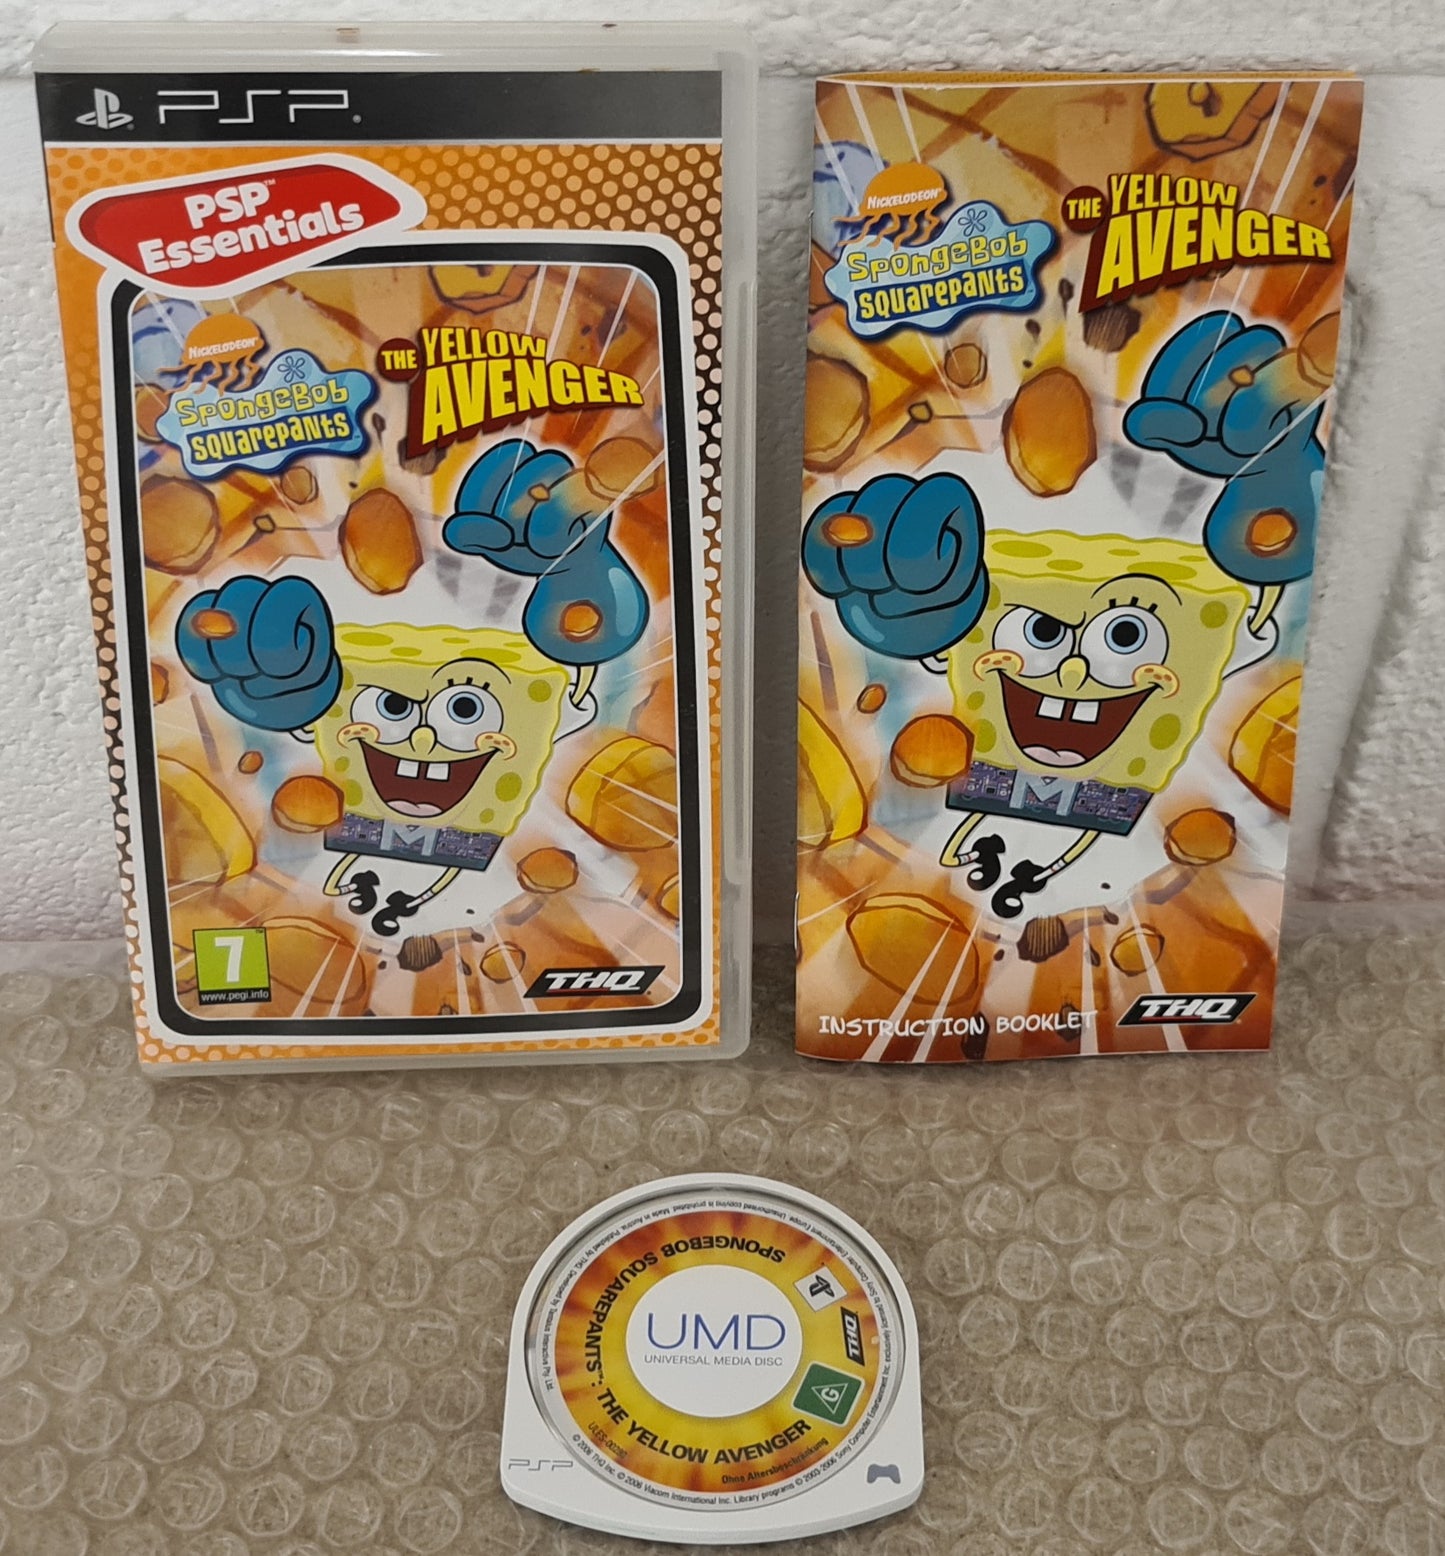 Spongebob Squarepants the Yellow Avenger Sony PSP Game